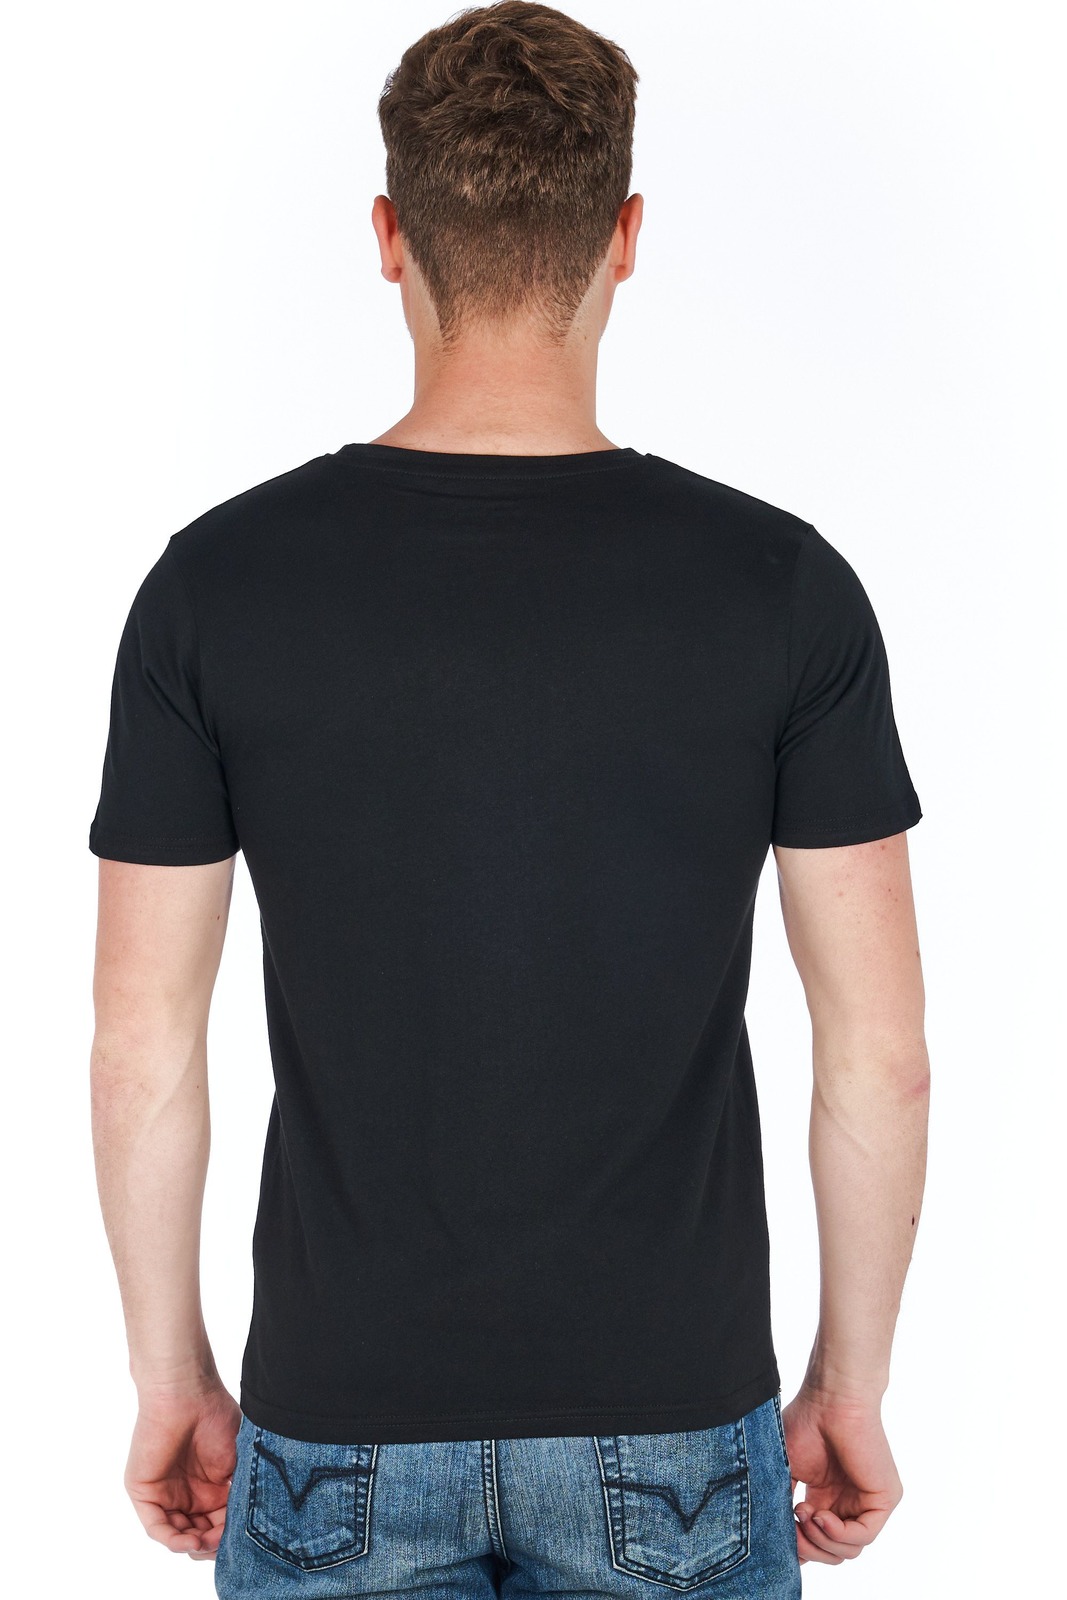 Jeckerson Black T-shirts for Men - POINT